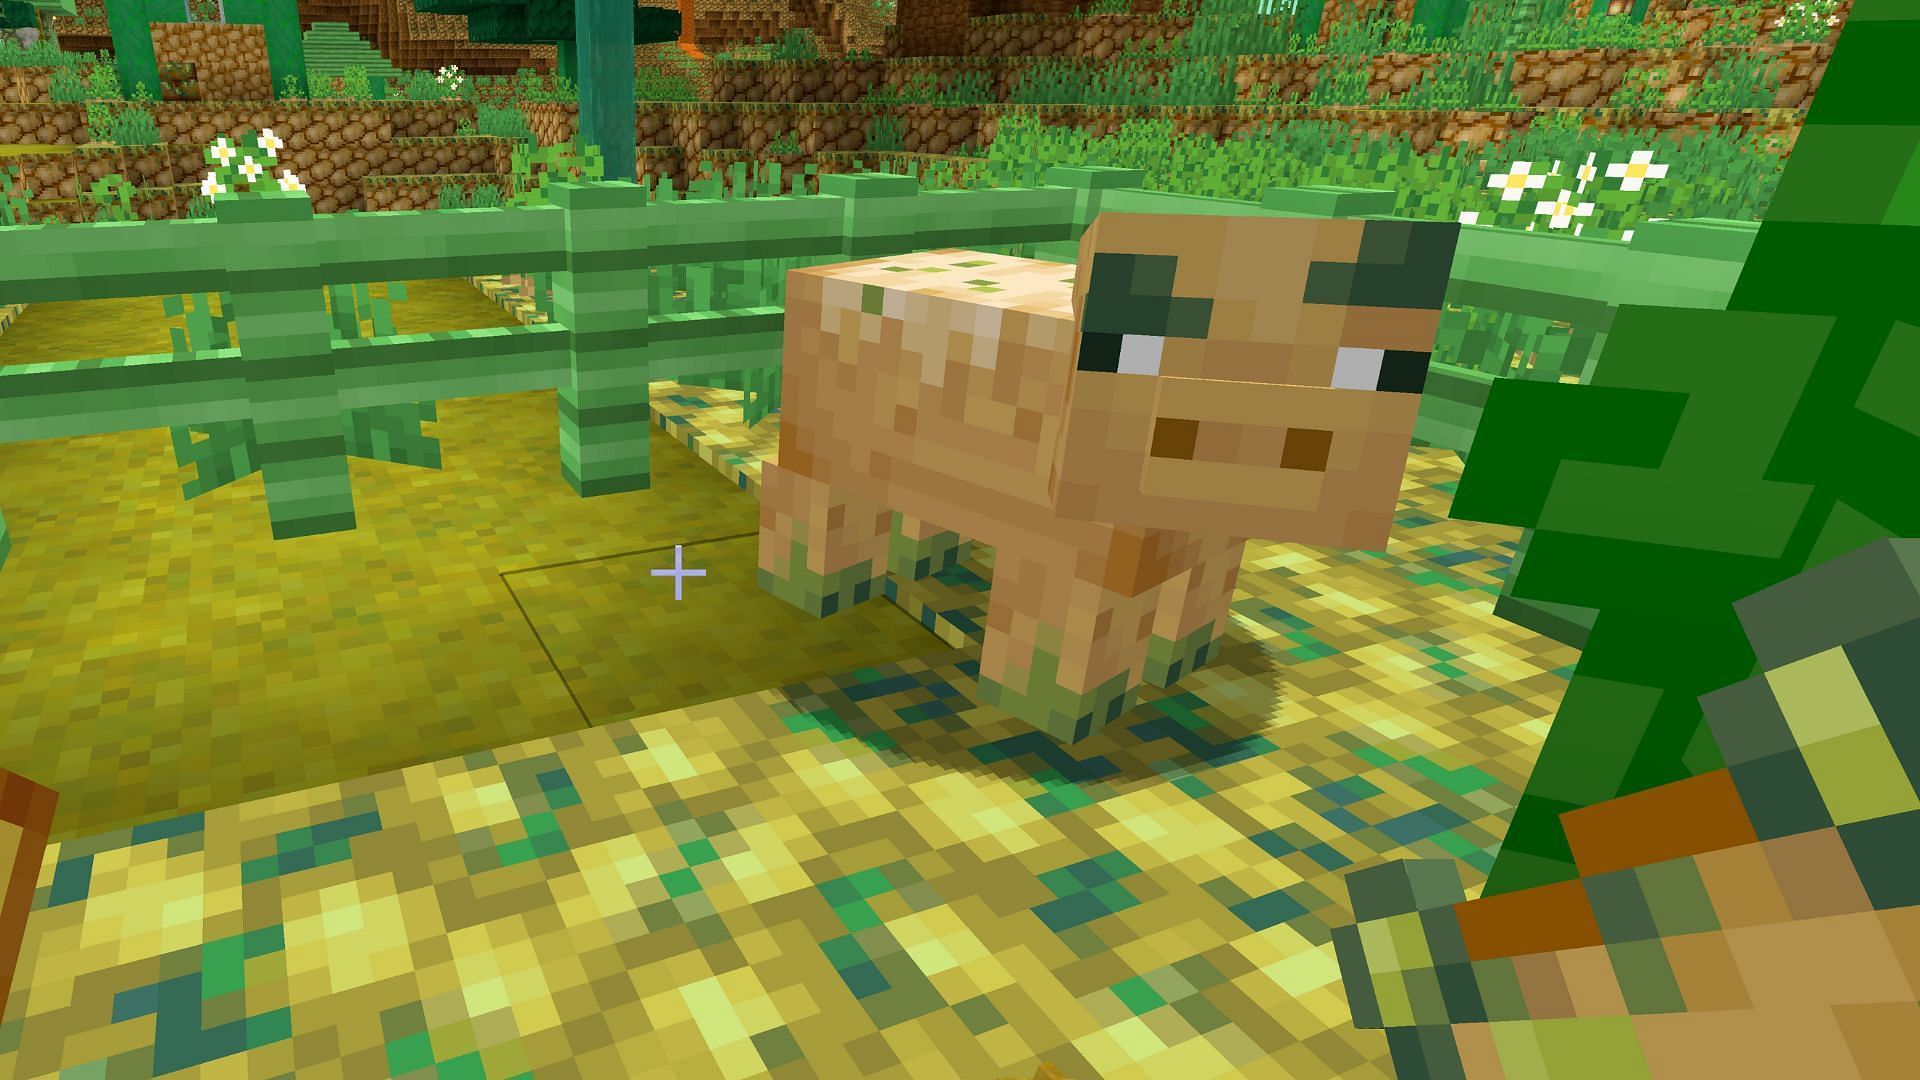 The pig in Potato dimension (Image via Mojang Studios)